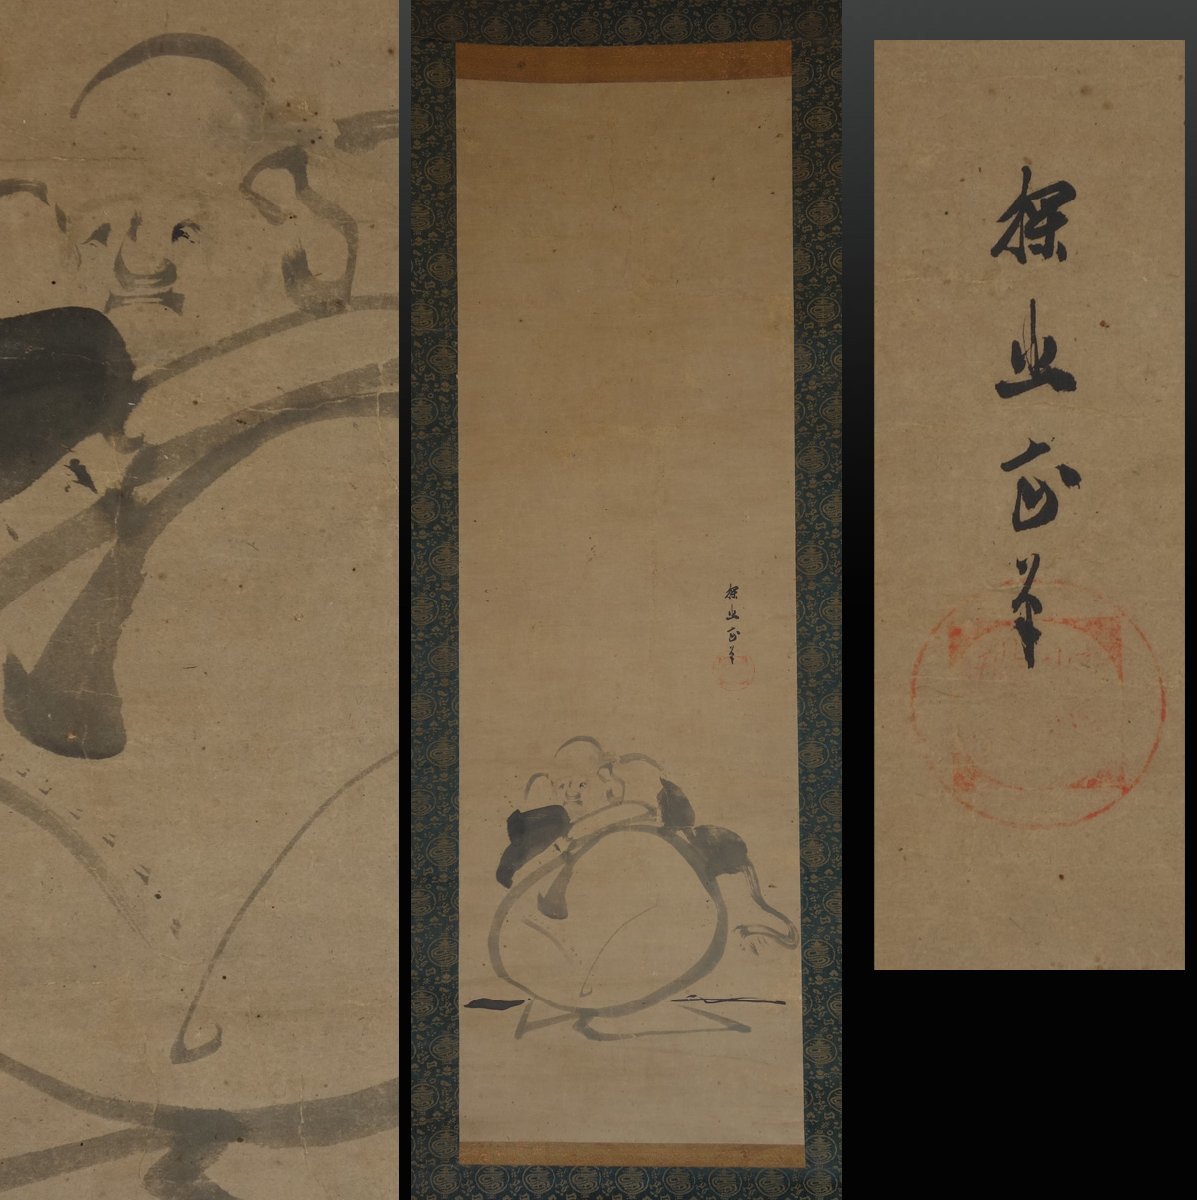 Yahoo!オークション -「中国 水墨画」(日本画) (絵画)の落札相場・落札価格